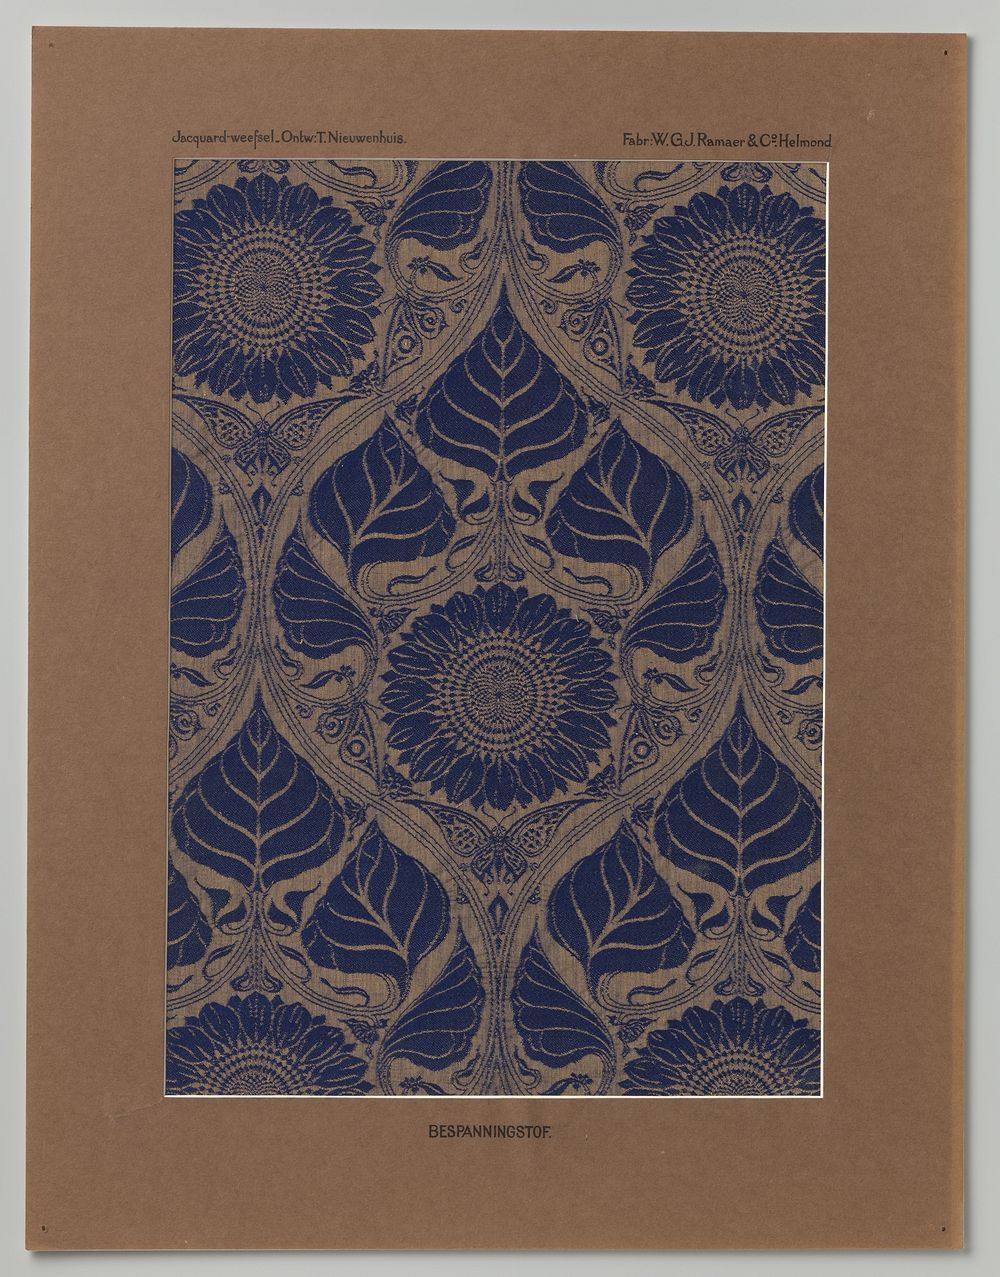 Staal bespanningsstof naar ontwerp van Theo Nieuwenhuis in passe-partout (c. 1910) by Theo Nieuwenhuis and W G J Ramaer and…